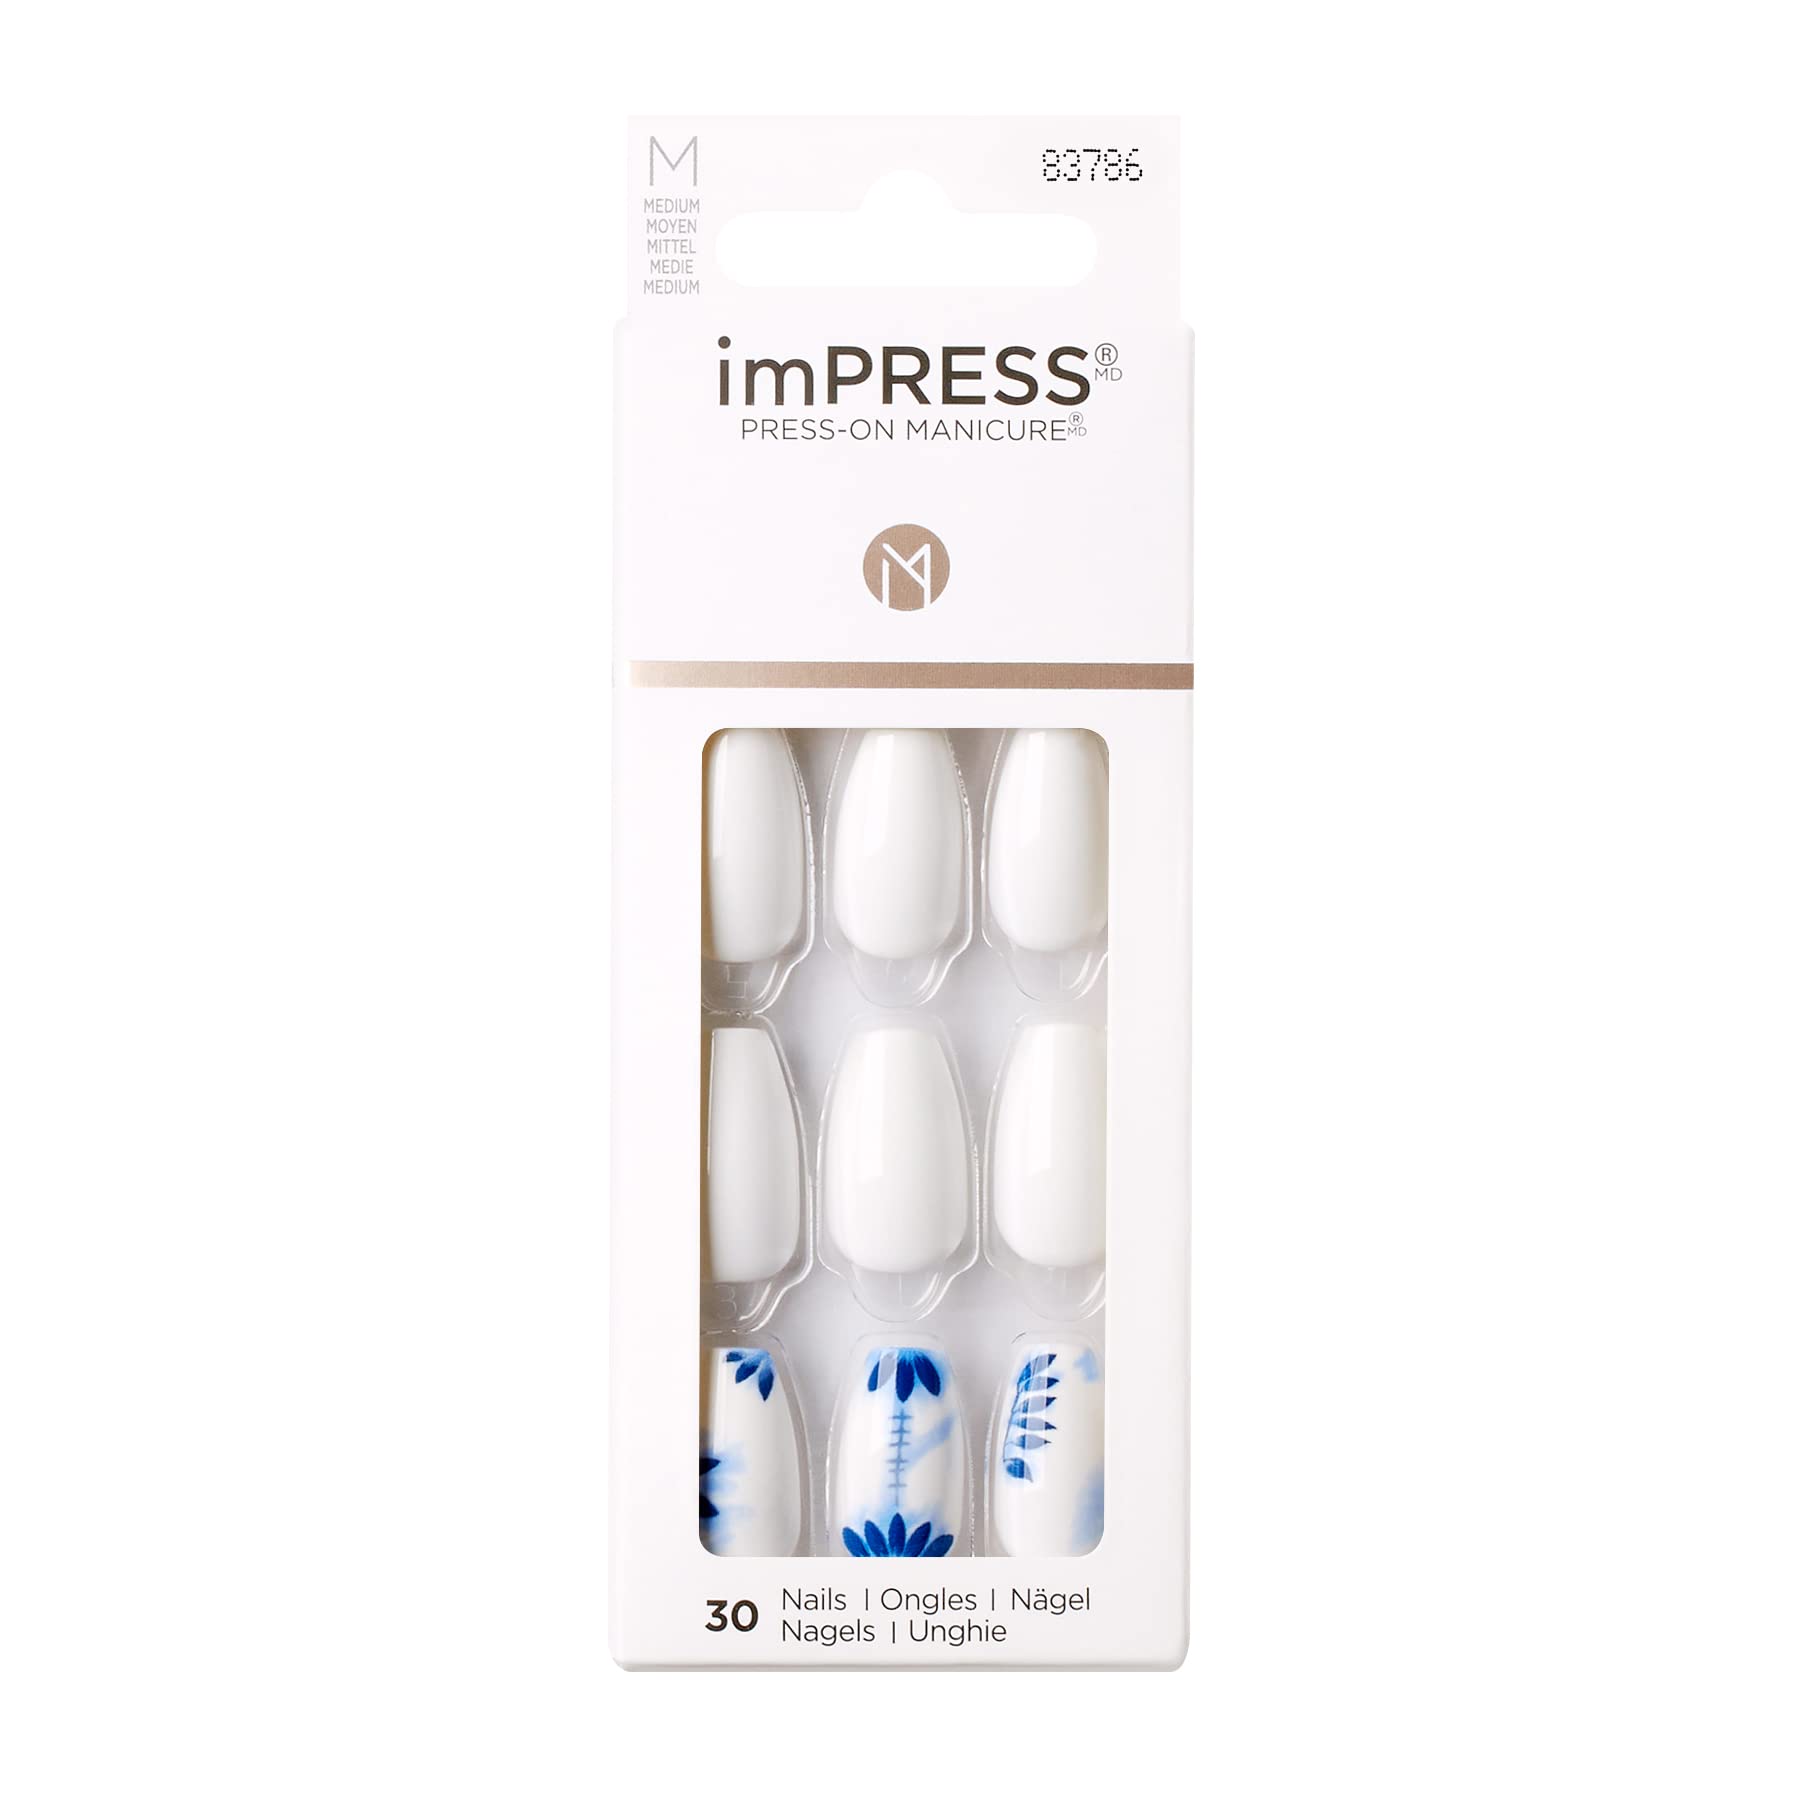 KISS imPRESS Press-On Manicure Nail Kit PureFit Technology Medium Length  Press-On Nails 'Tye Dye' Includes Prep Pad Mini Nail File Cuticle Stick and  30 Fake Nails